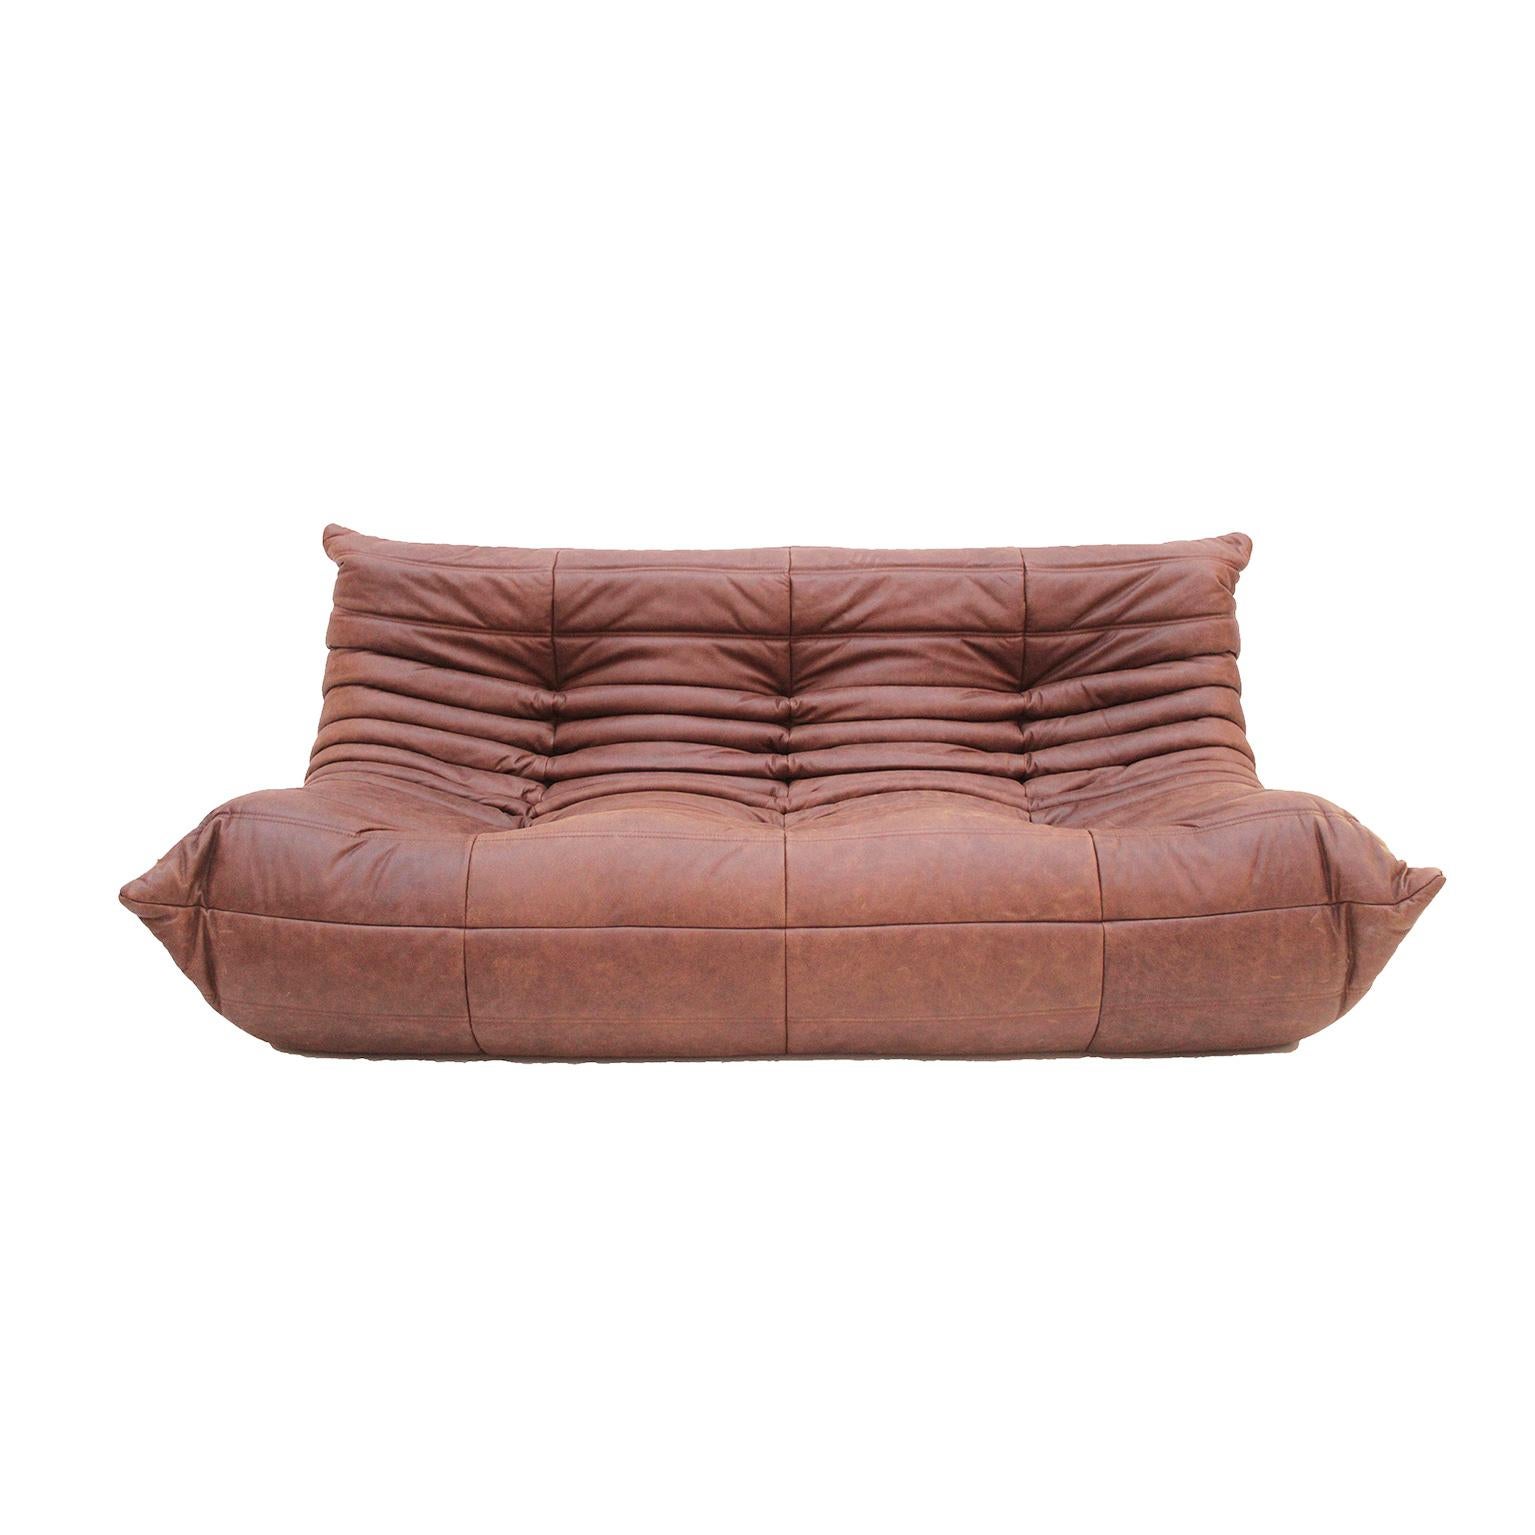 Set mod. Togo designed by Michel Ducaroy for Ligne Roset. Reupholstered in brown leather. France 70's.

Dimensions: W265 x D 190 x H 35 / 70 cm
Double armchair size: W 120 x D 100 x H 35 / 70 cm
Corner sofa: W 100 x D 100 x H 35 / 70 cm (1 item) D